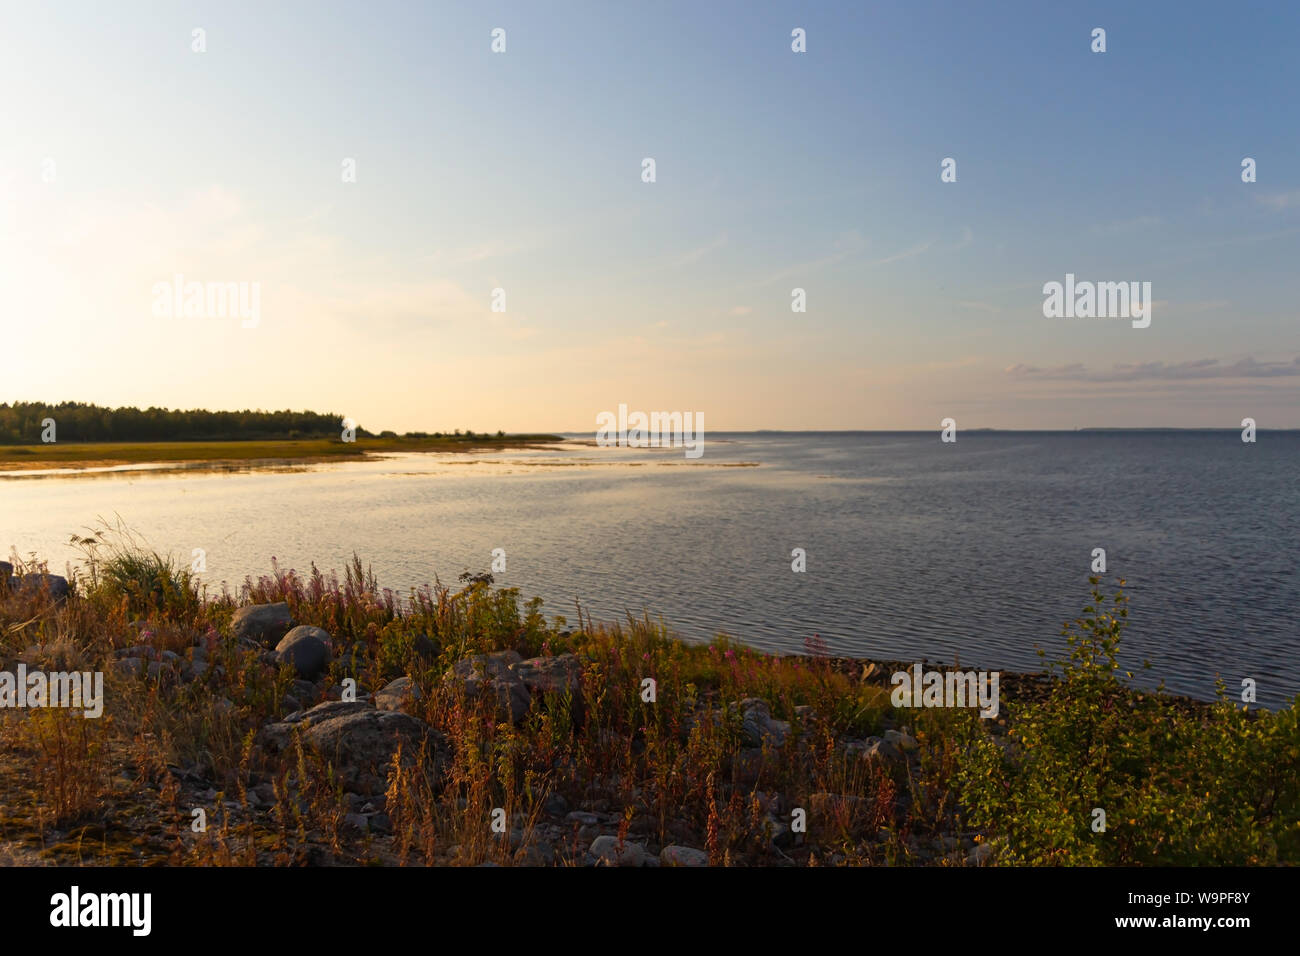 Insel Hailuoto (Huikku Strand) Sommer Abend bei Sonnenuntergang, Insel Hailuoto,Österbotten, Finnland Stockfoto